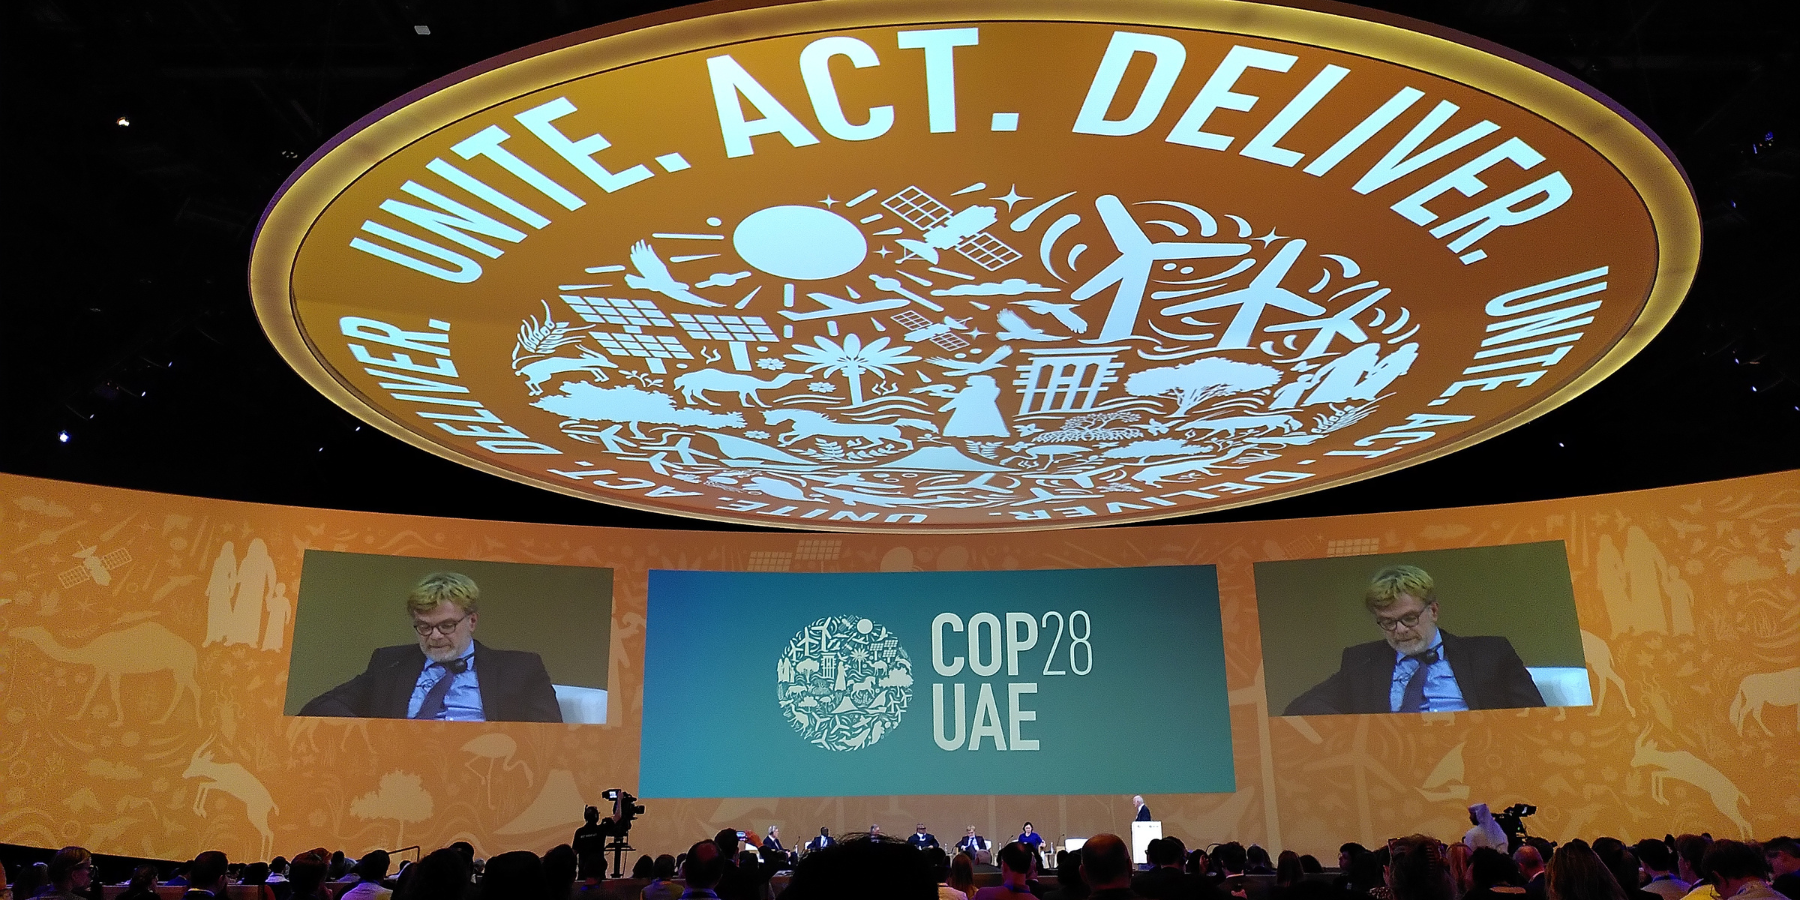 COP28 clima successo o fallimento